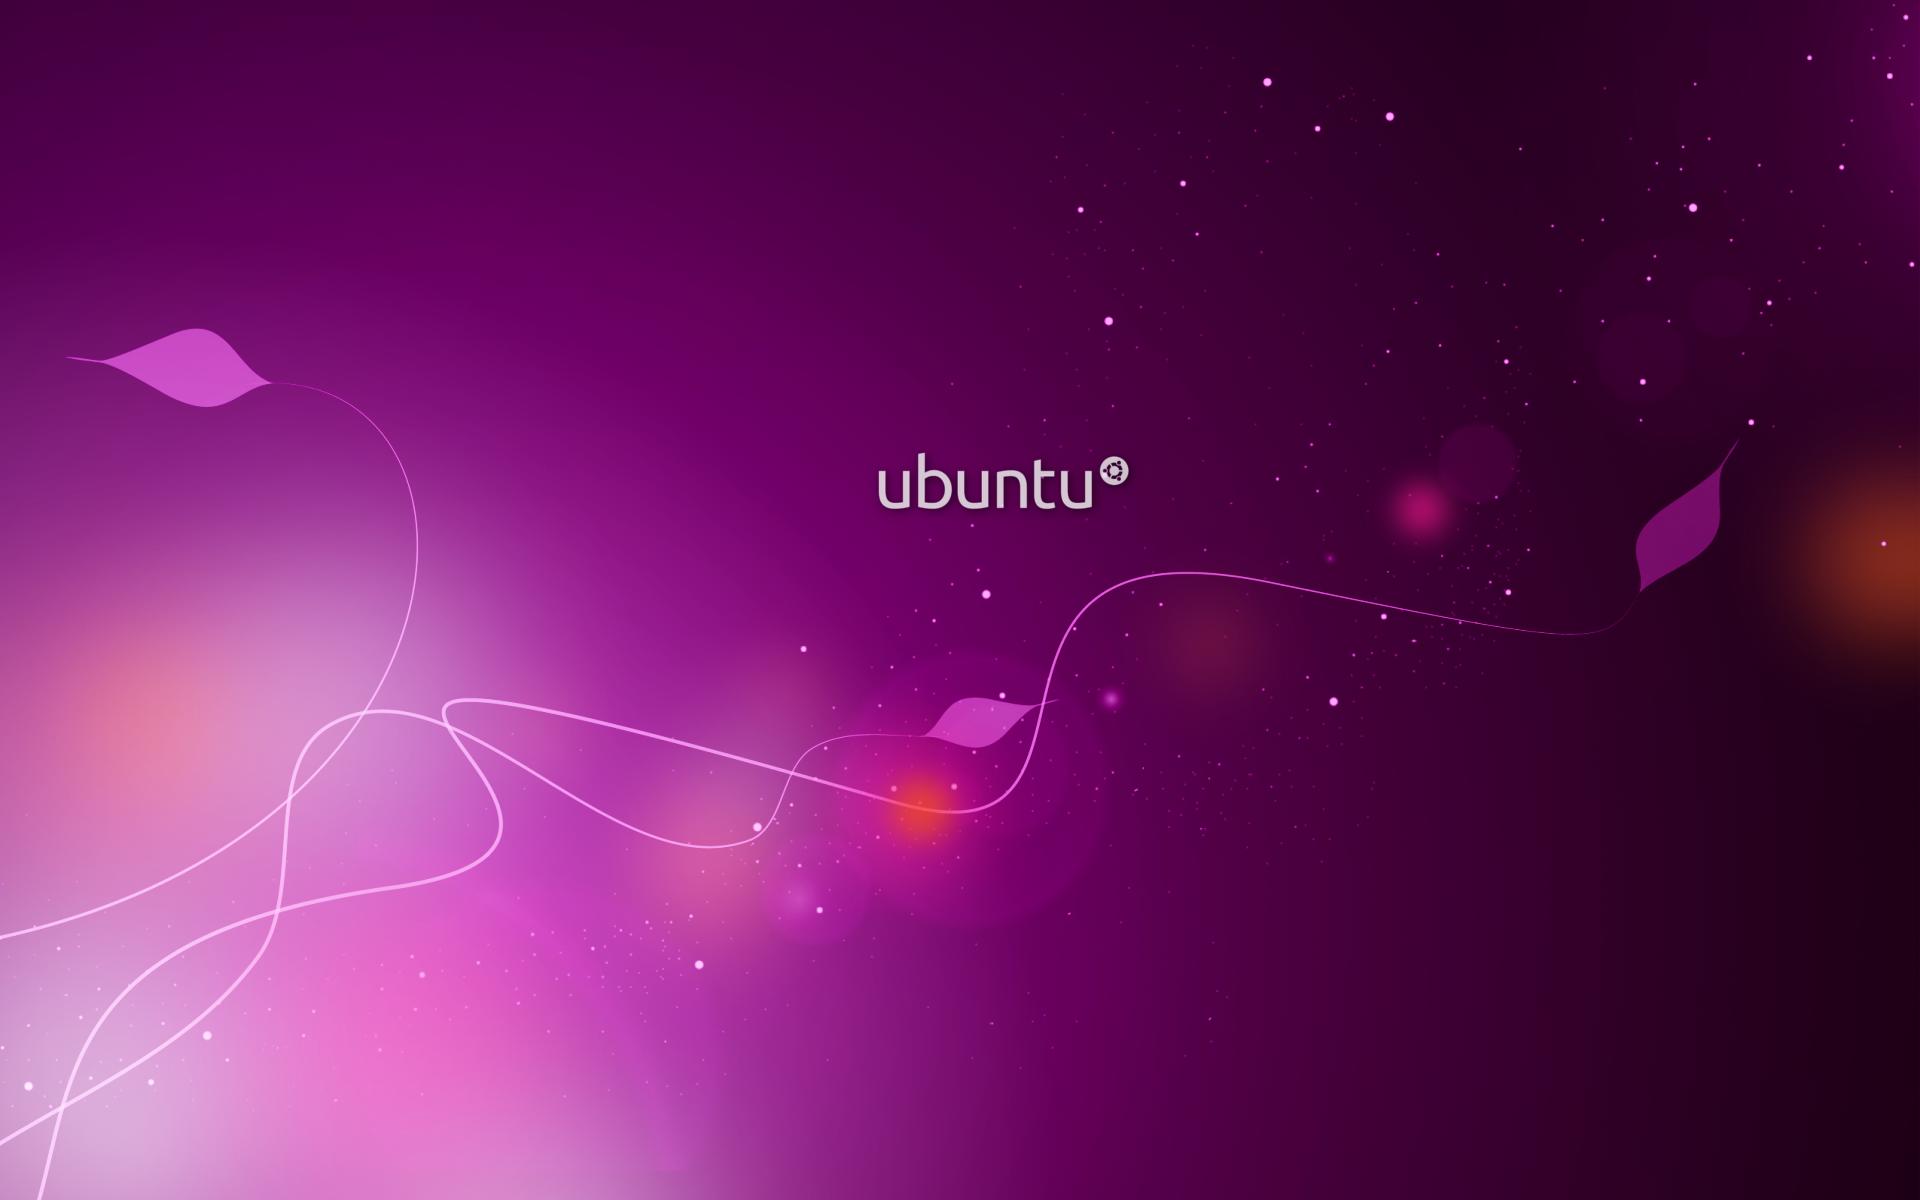 Ubuntu Background wallpaper. Linux Wallpaper #